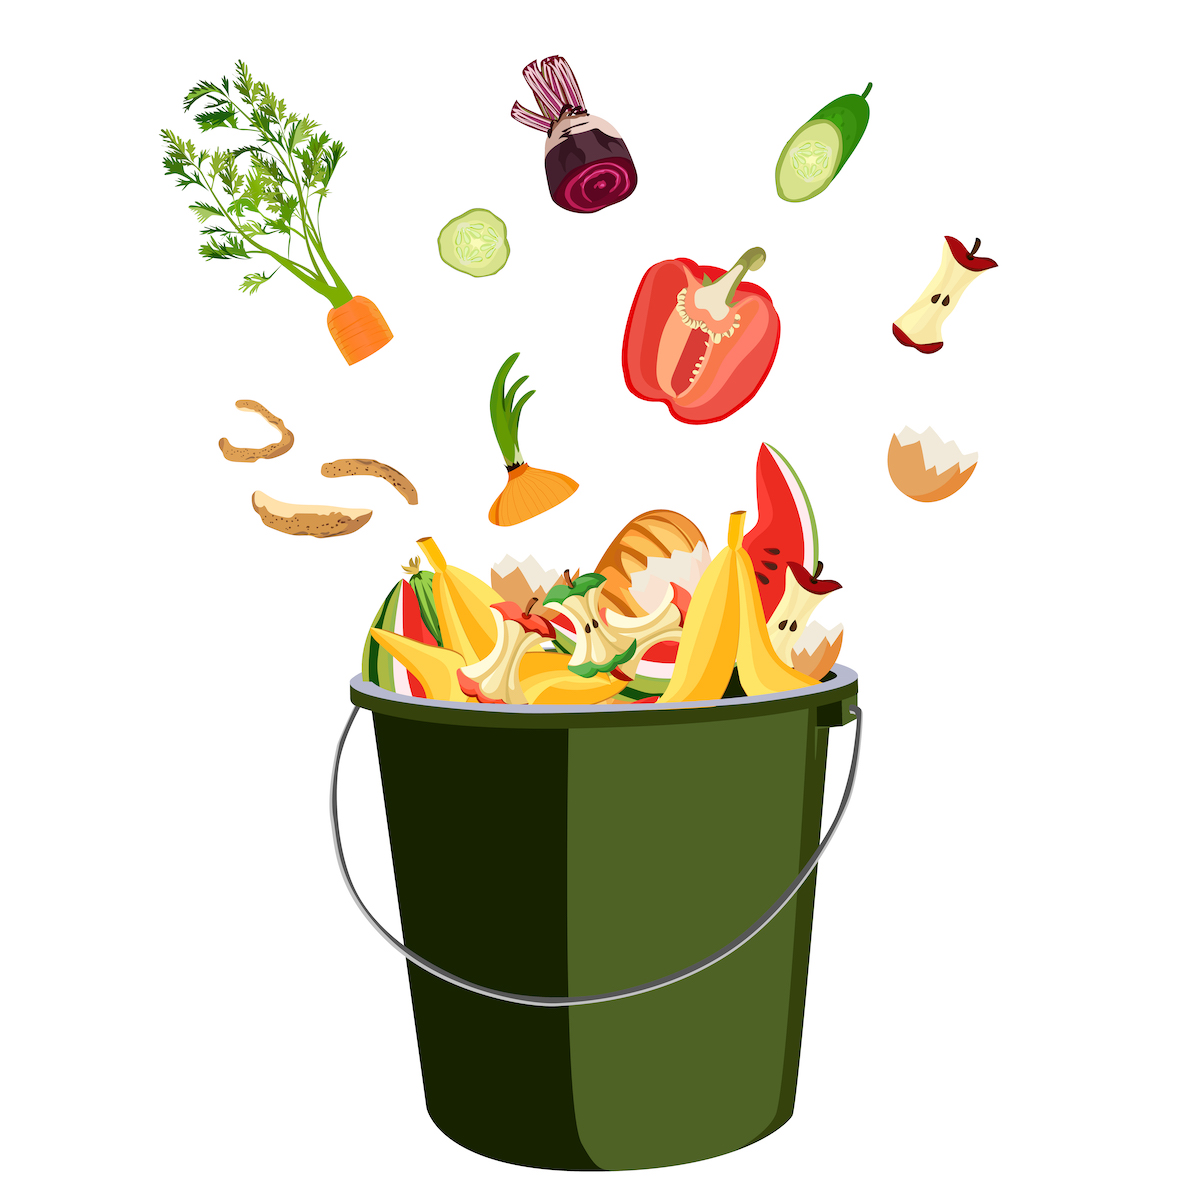 Bimeda Ireland Introduces Food Composting